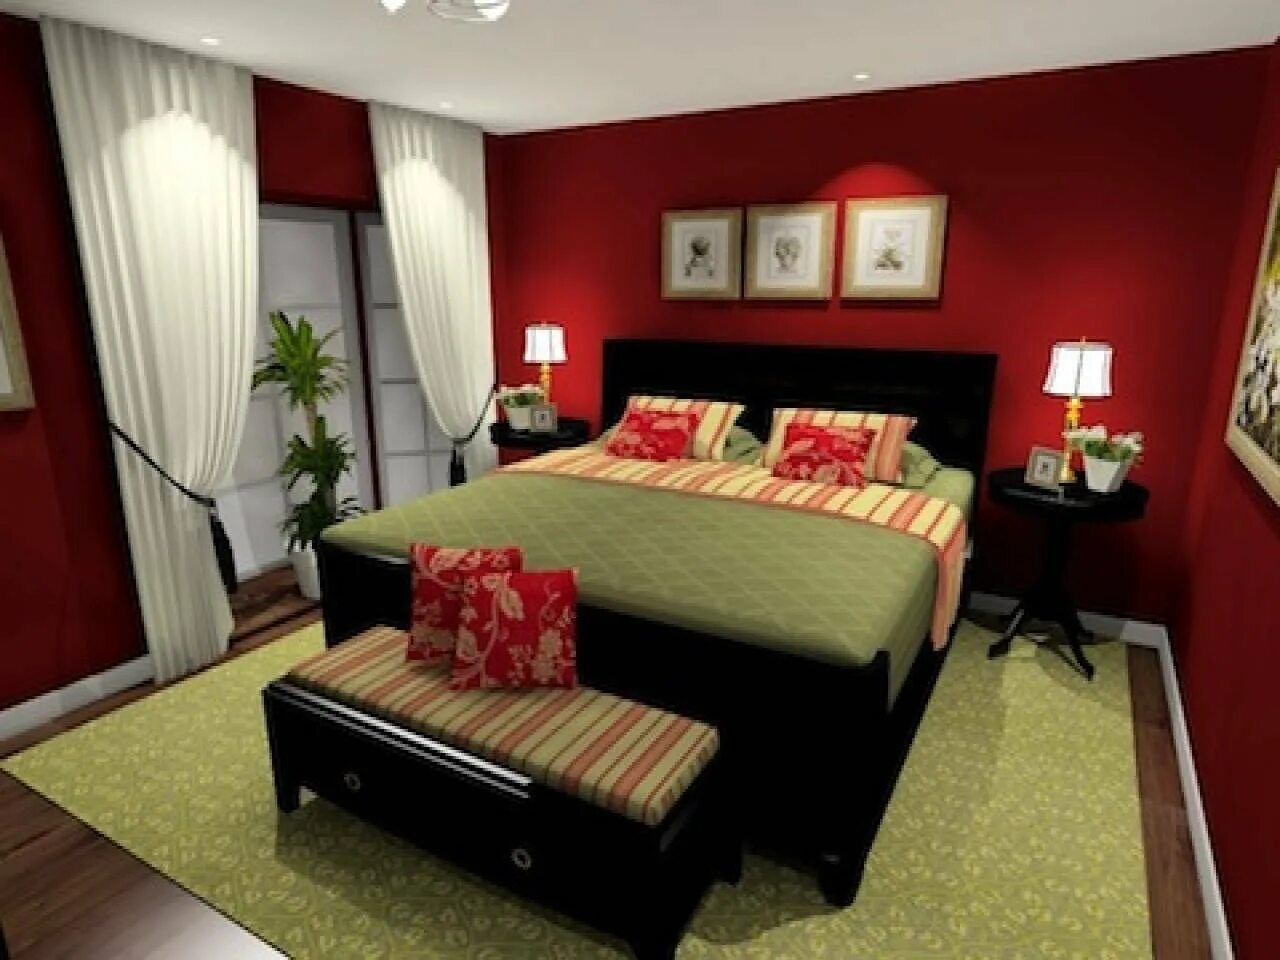 Red and choose. Красно зеленая спальня. Красная стена в спальне. Спальня в красных тонах. Красно белая спальня.